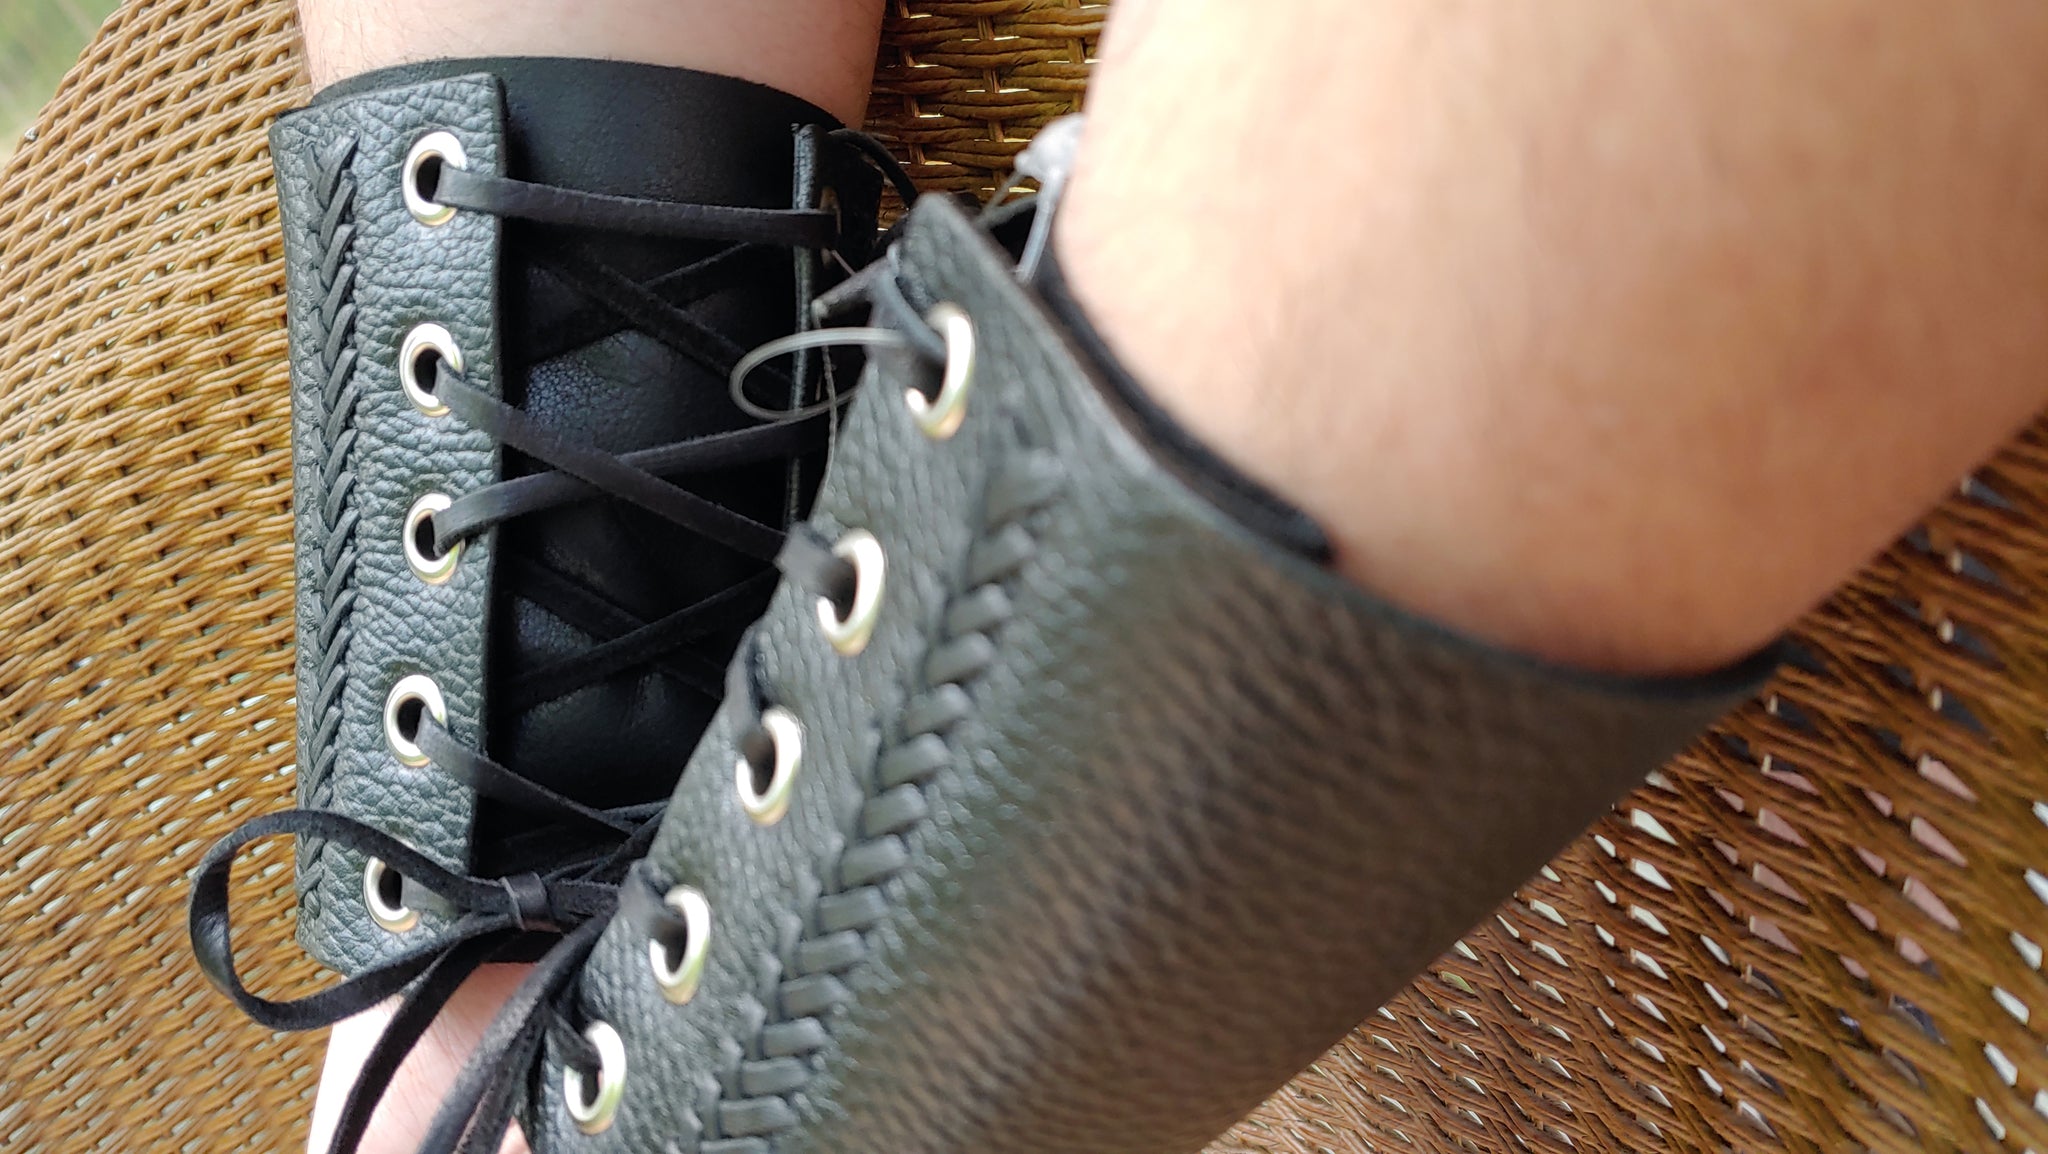 JAJA - 2 Corset Style Braided Leather Cuff Bracelets - pair